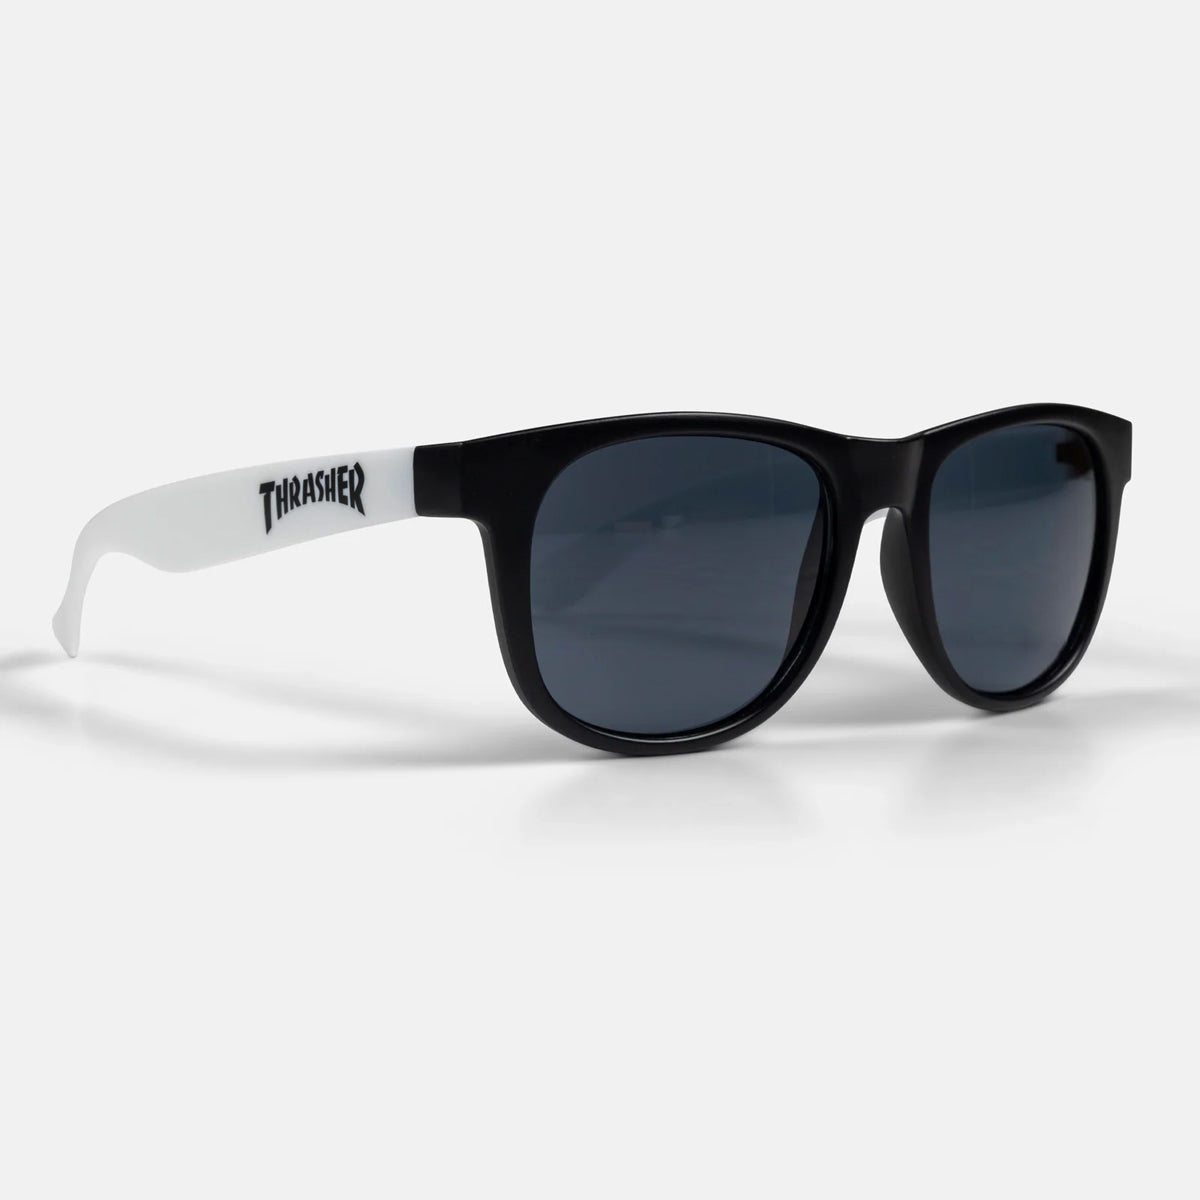 Thrasher logo Sunglasses